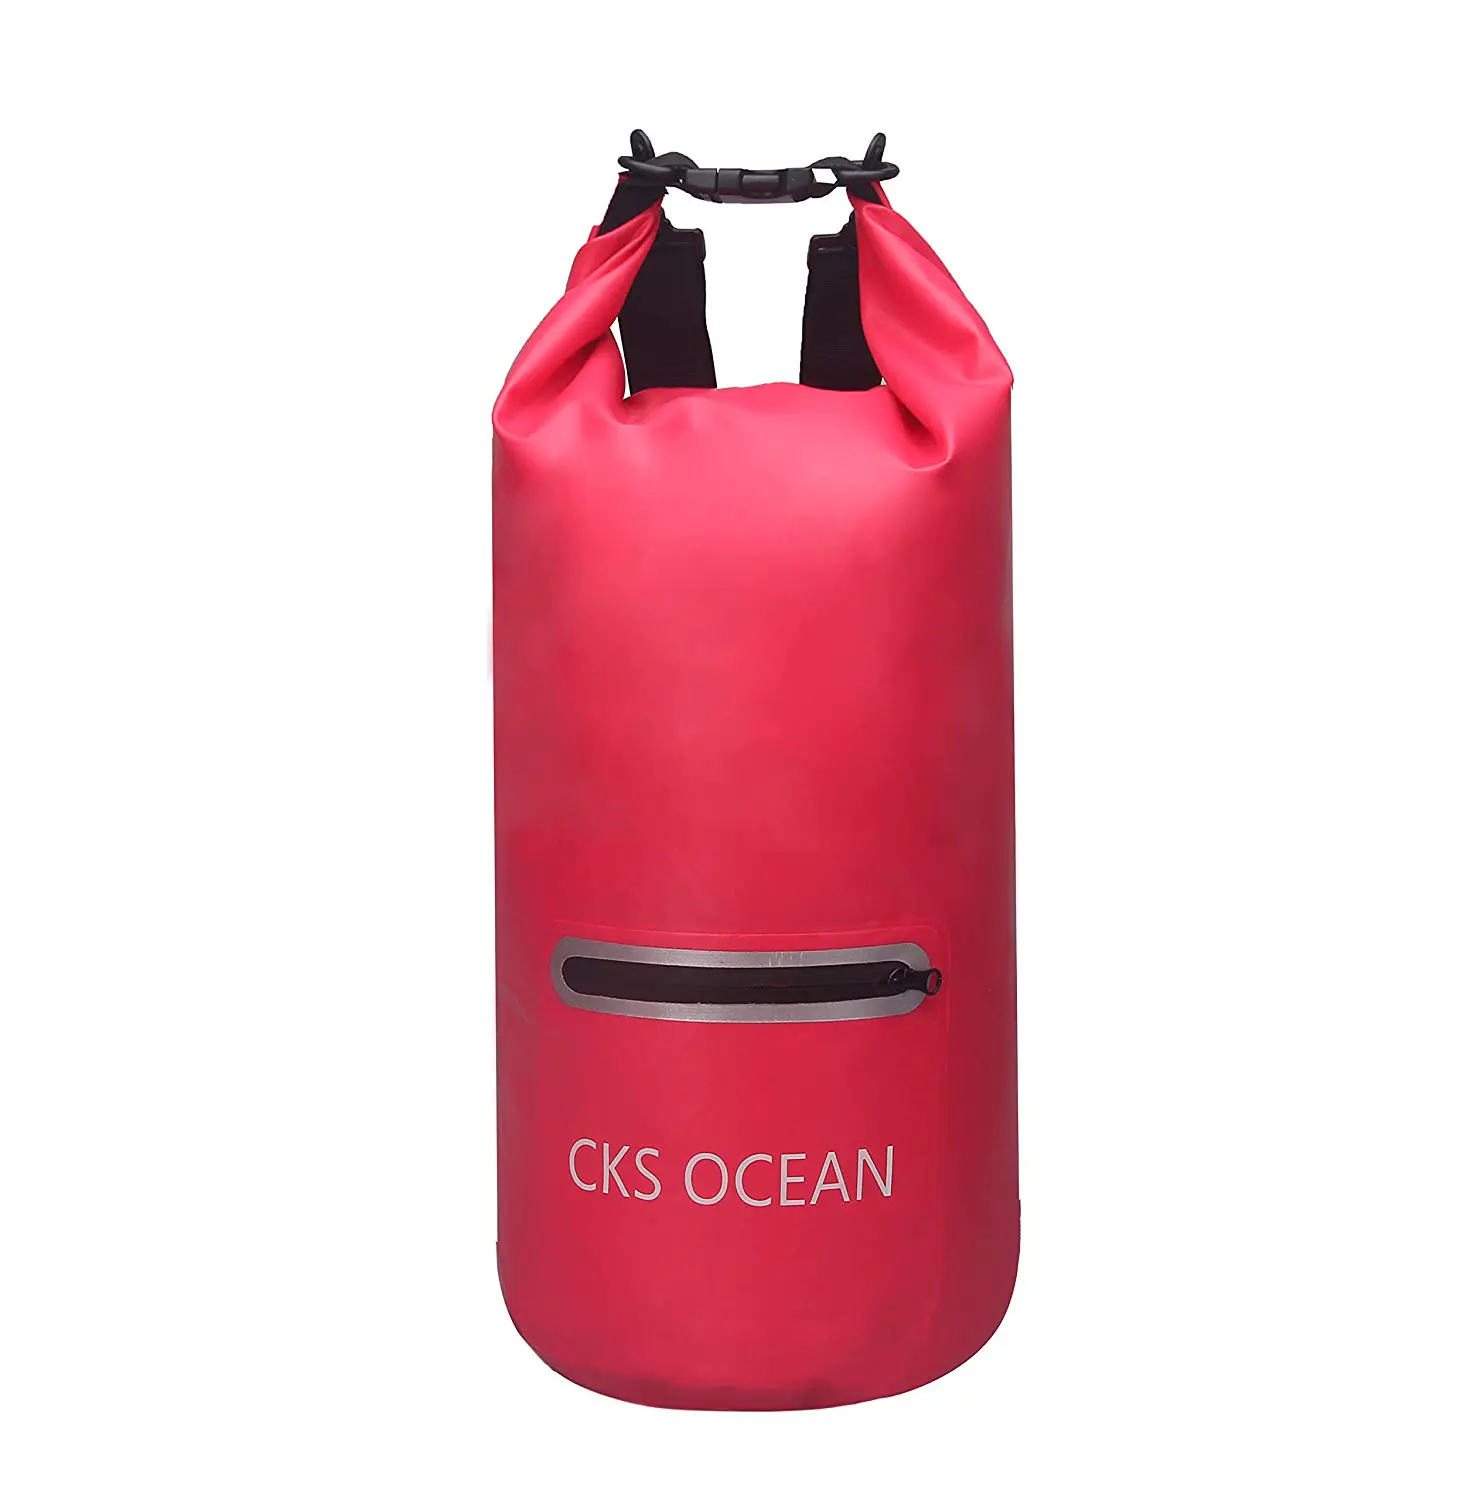 Prosperity sport drybag manufacturer open water swim buoy flotation device